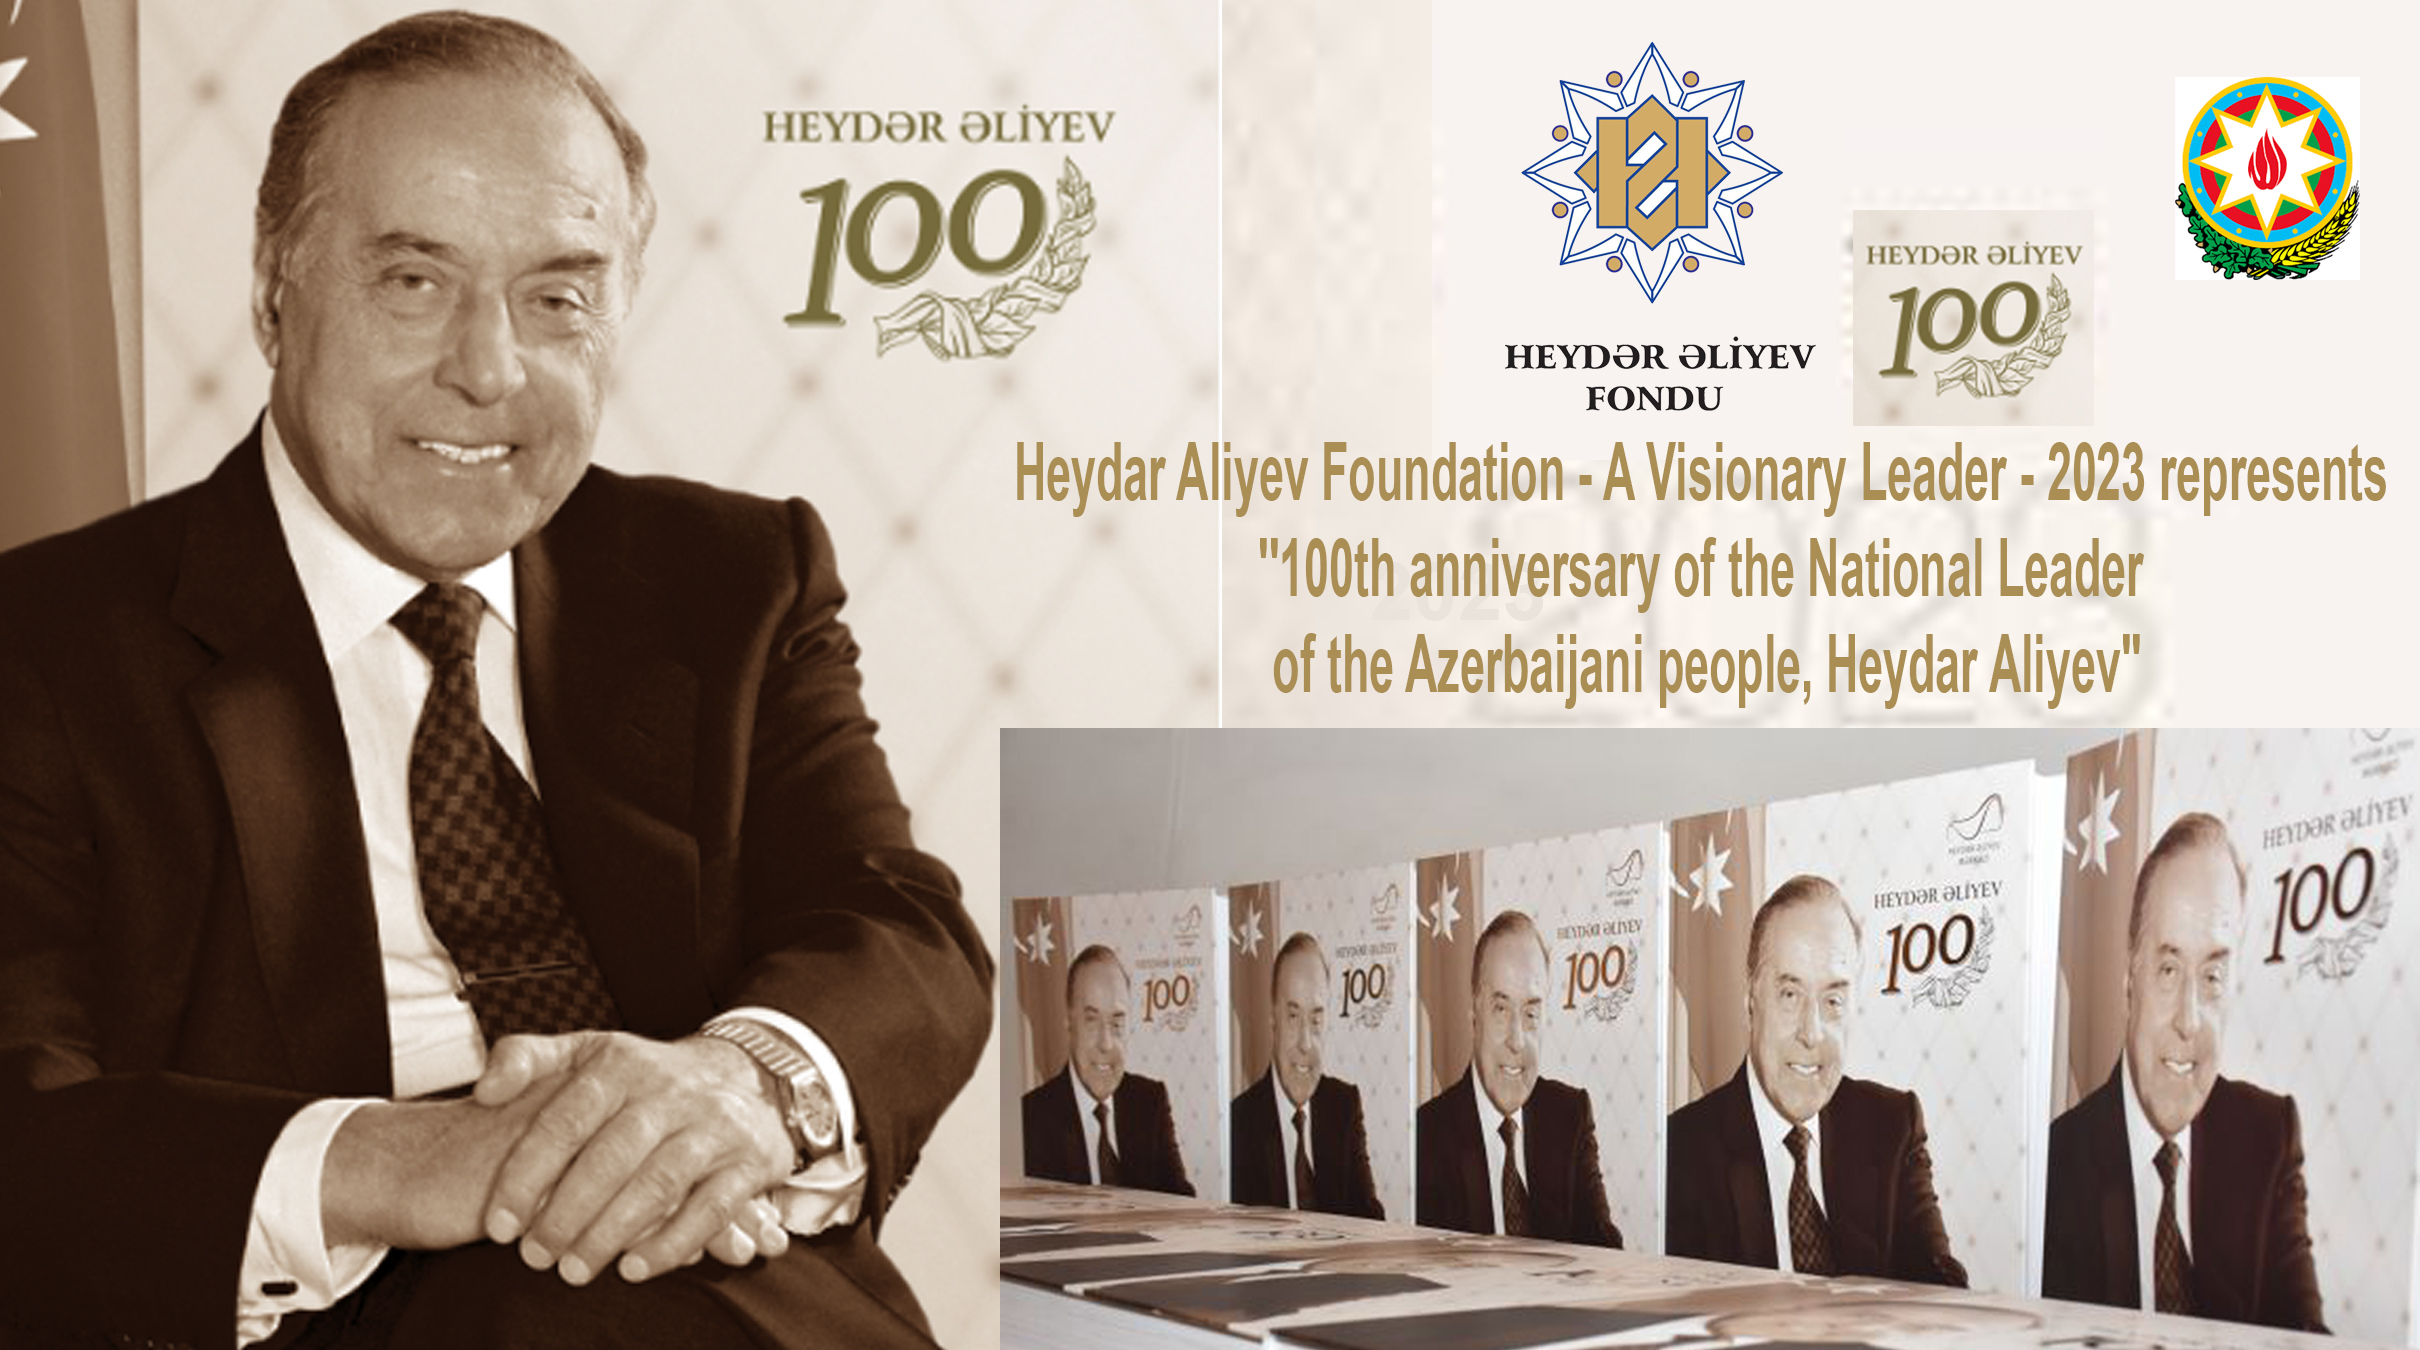 AFRICA-VOGUE-COVER-Heydar-Aliyev-Foundation-A-Visionary-Leader-2023-represents-100th-anniversary-of-the-National-Leader-of-the-Azerbaijani-people-Heydar-Aliyev-DN-A-INTERNATIONAL-Media-Partner